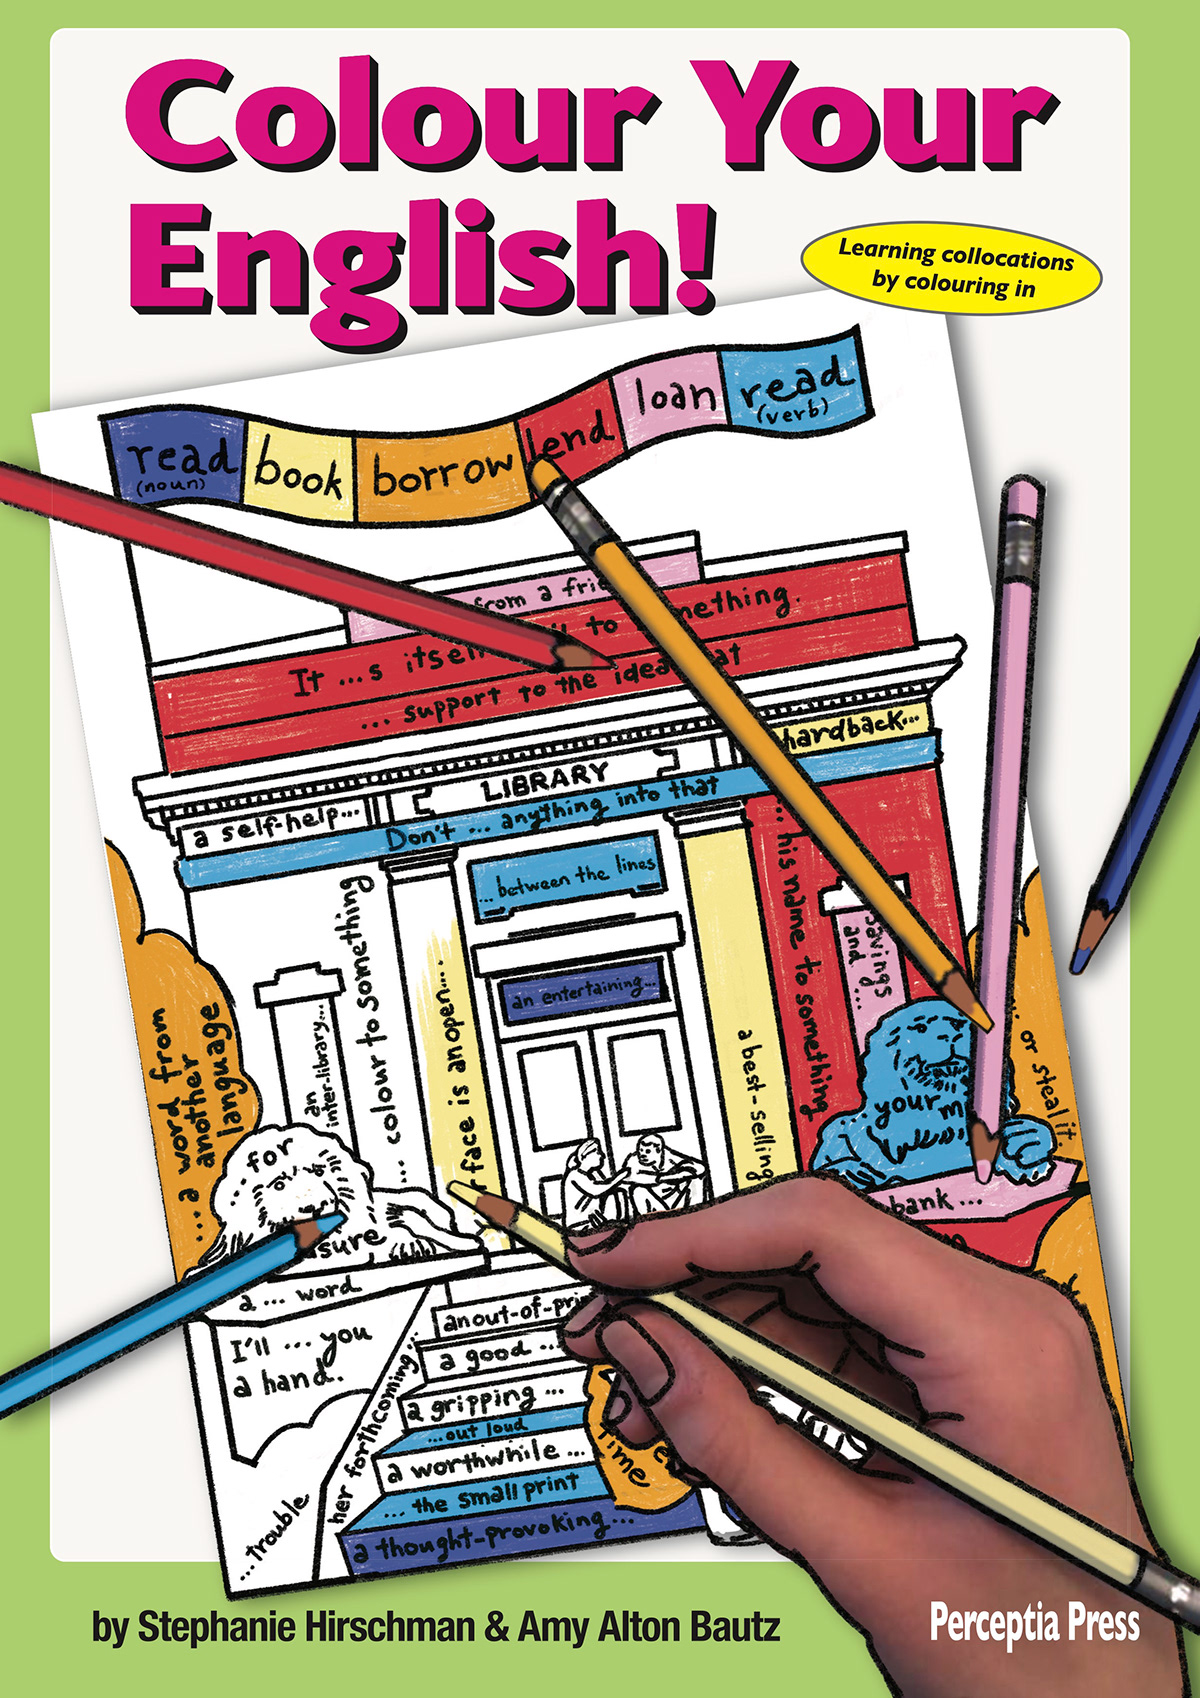 ILLUSTRATION  Language Learning language book English School escola de inglês ingles idiomas Education